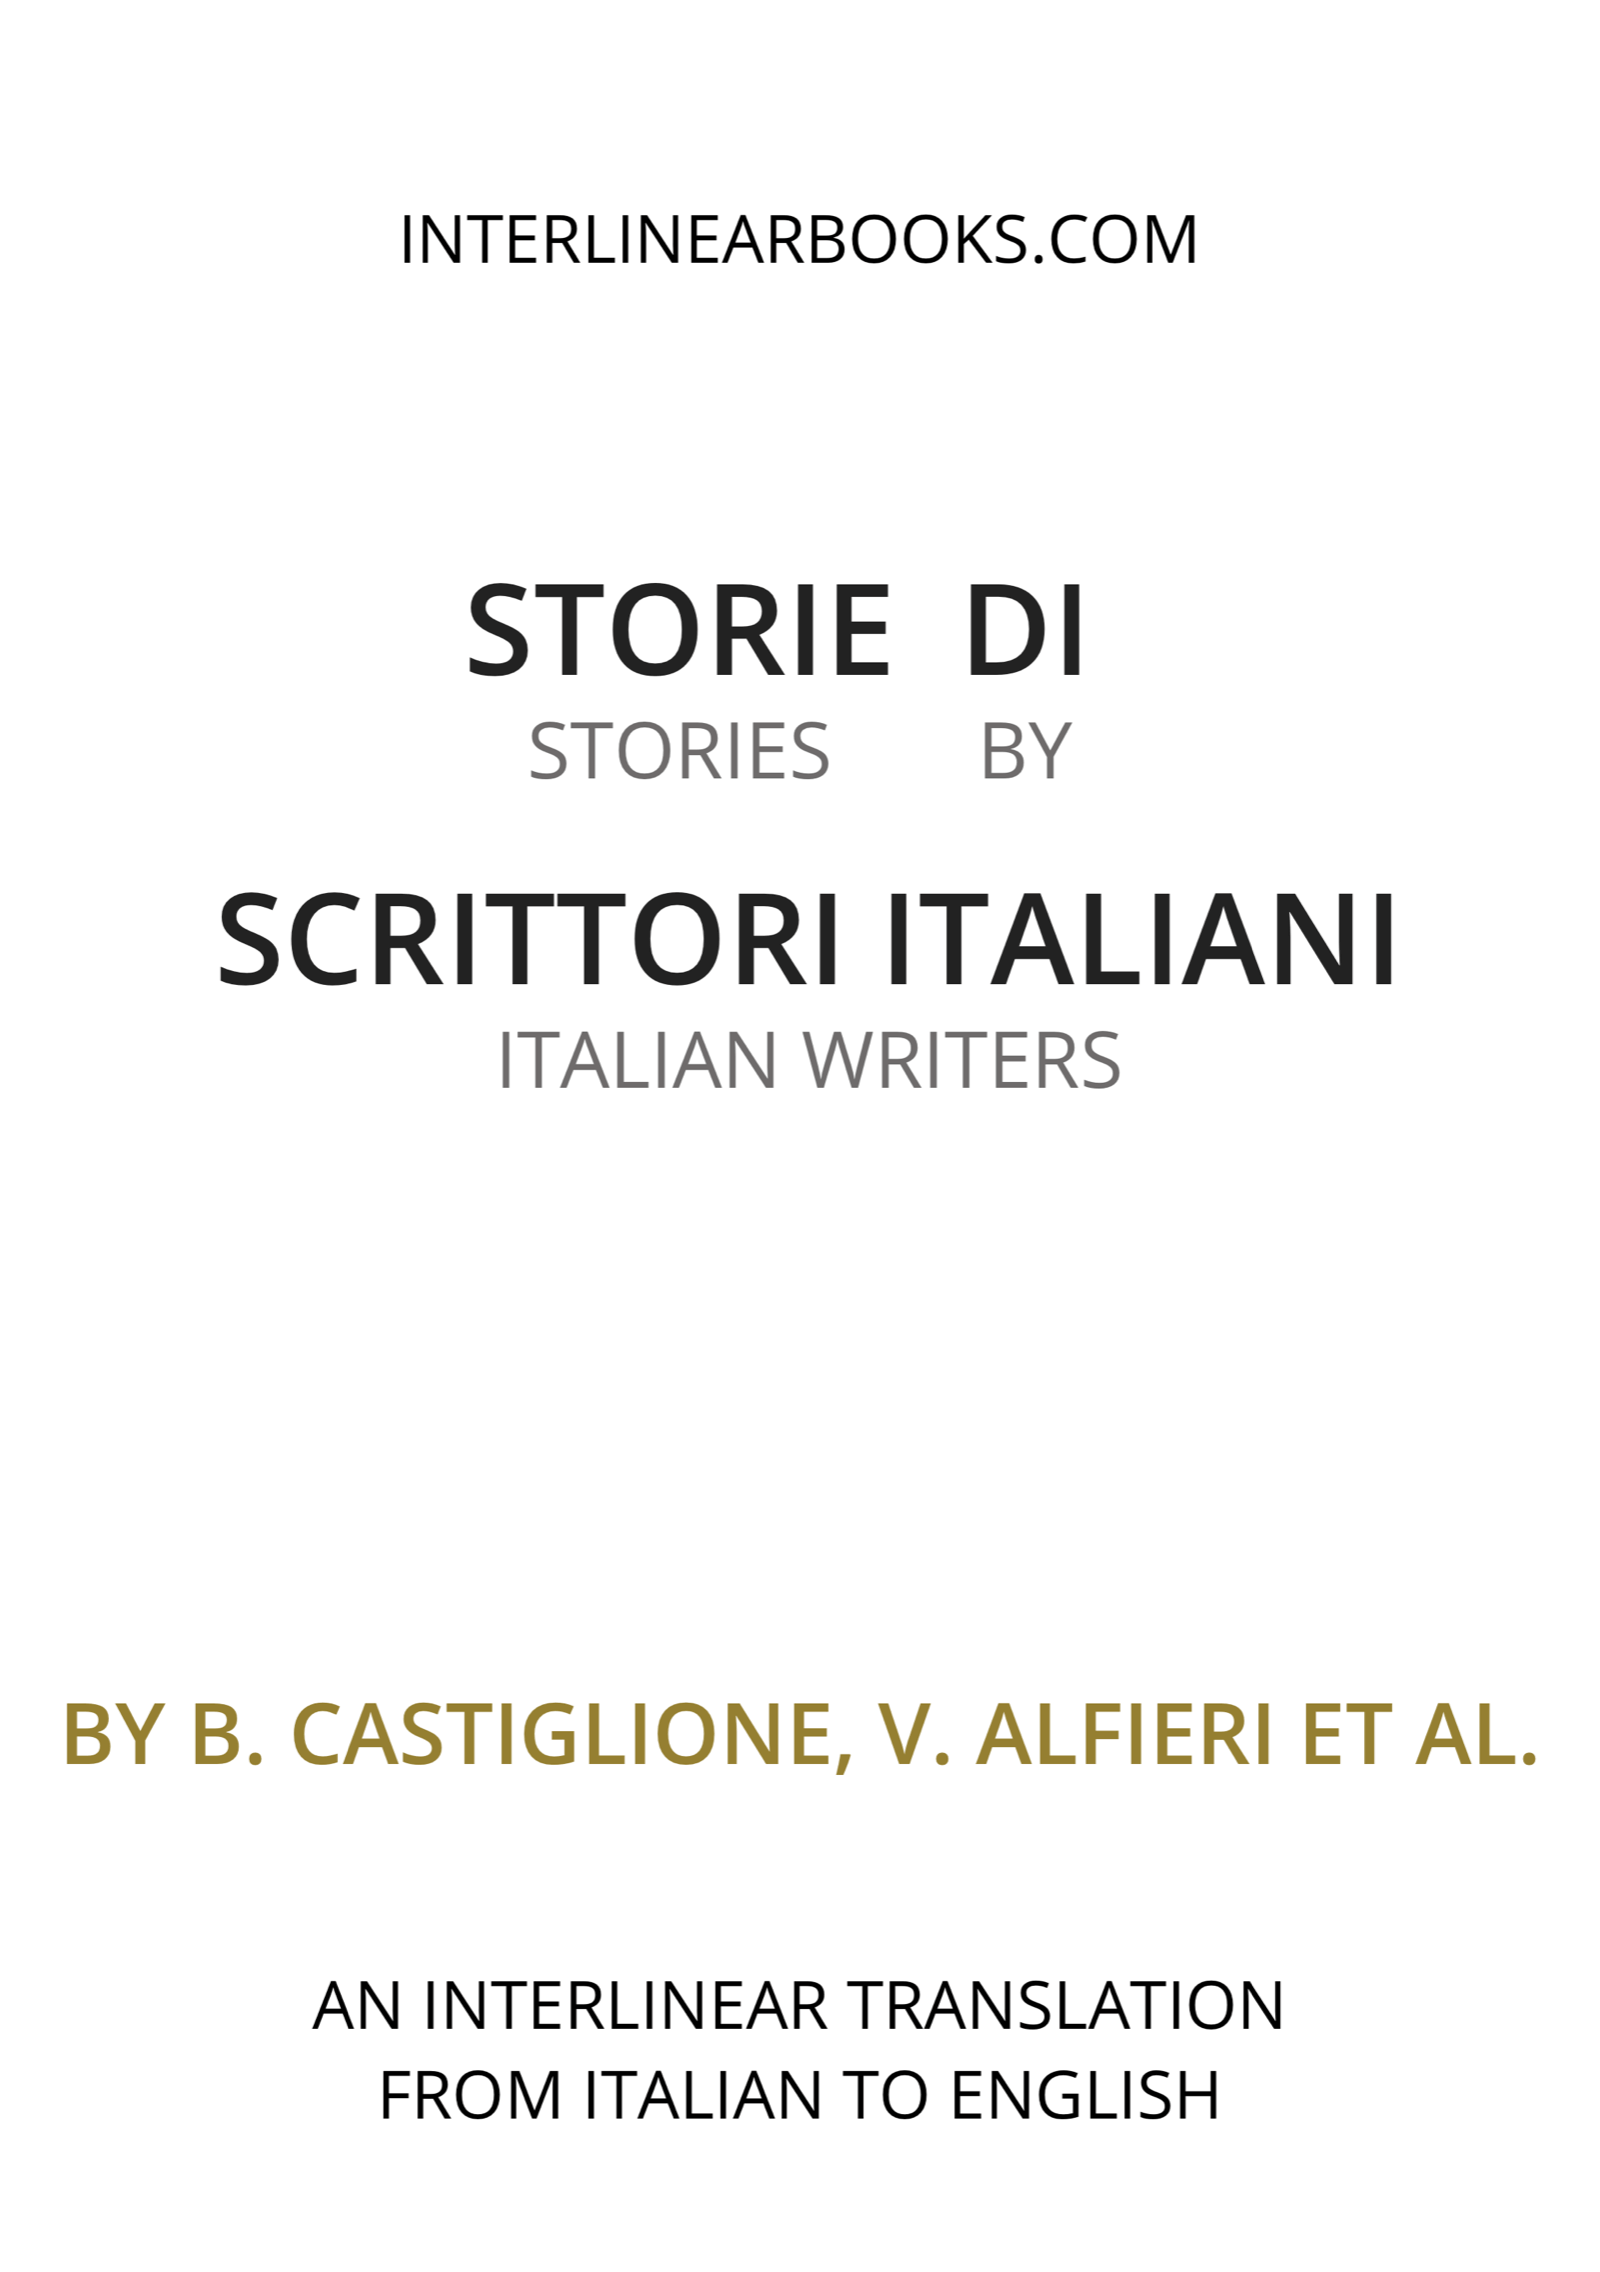 Italian book: Storie di scrittori italiani / Stories by Italian Writers